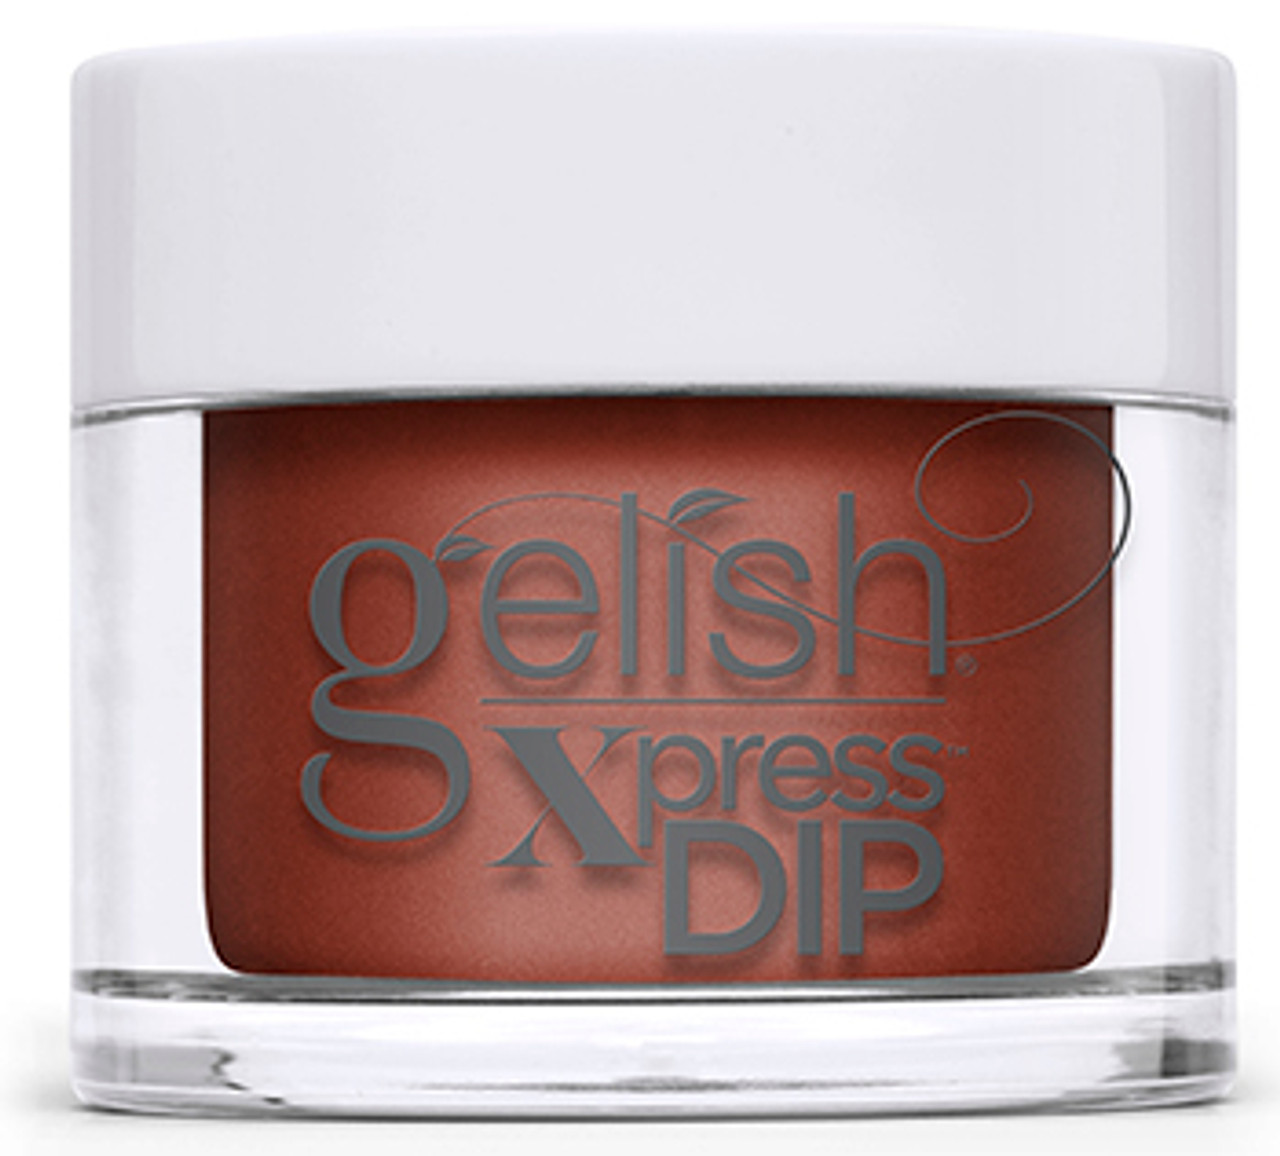 Gelish Xpress Dip Afternoon Escape - 1.5 oz / 43 g